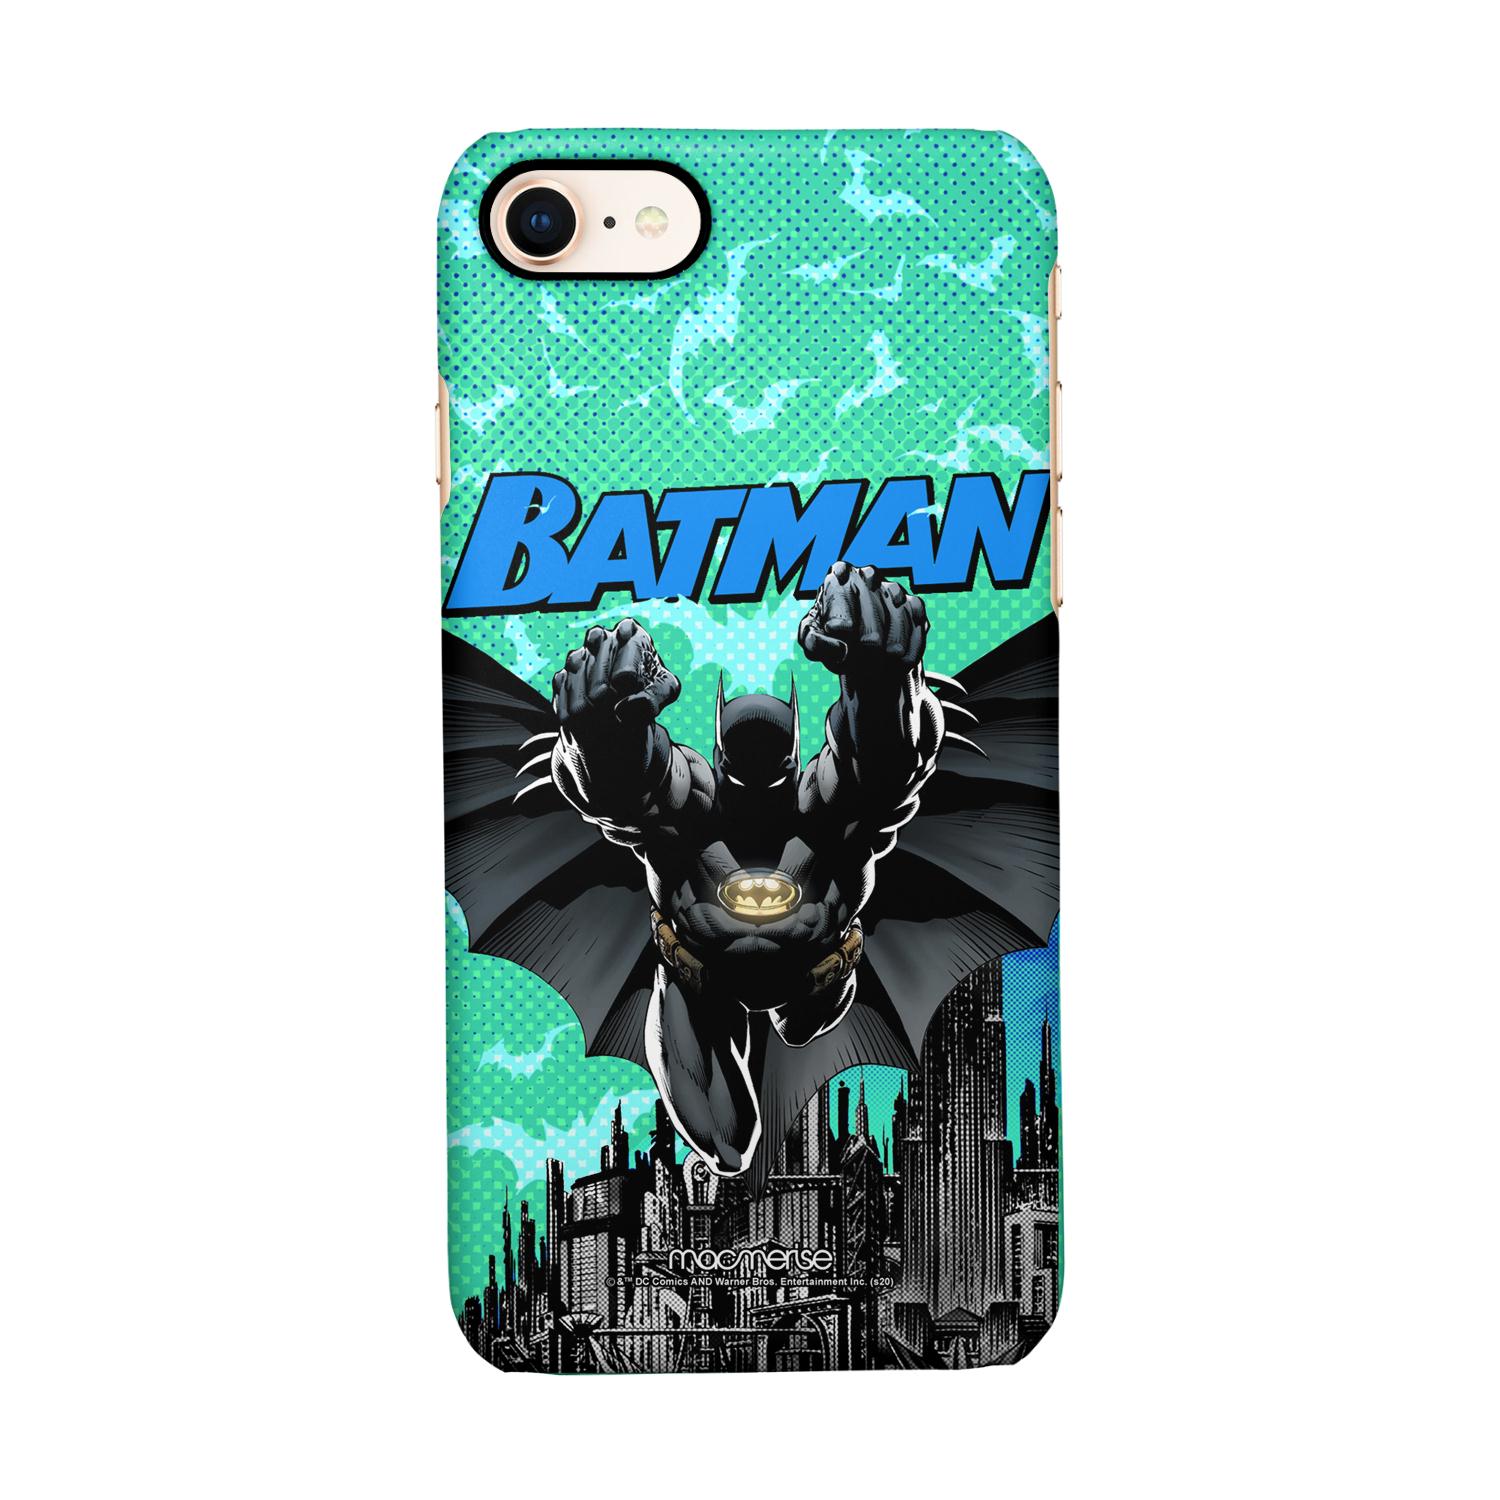 Buy Bat on the hunt - Sleek Phone Case for iPhone 8 Online